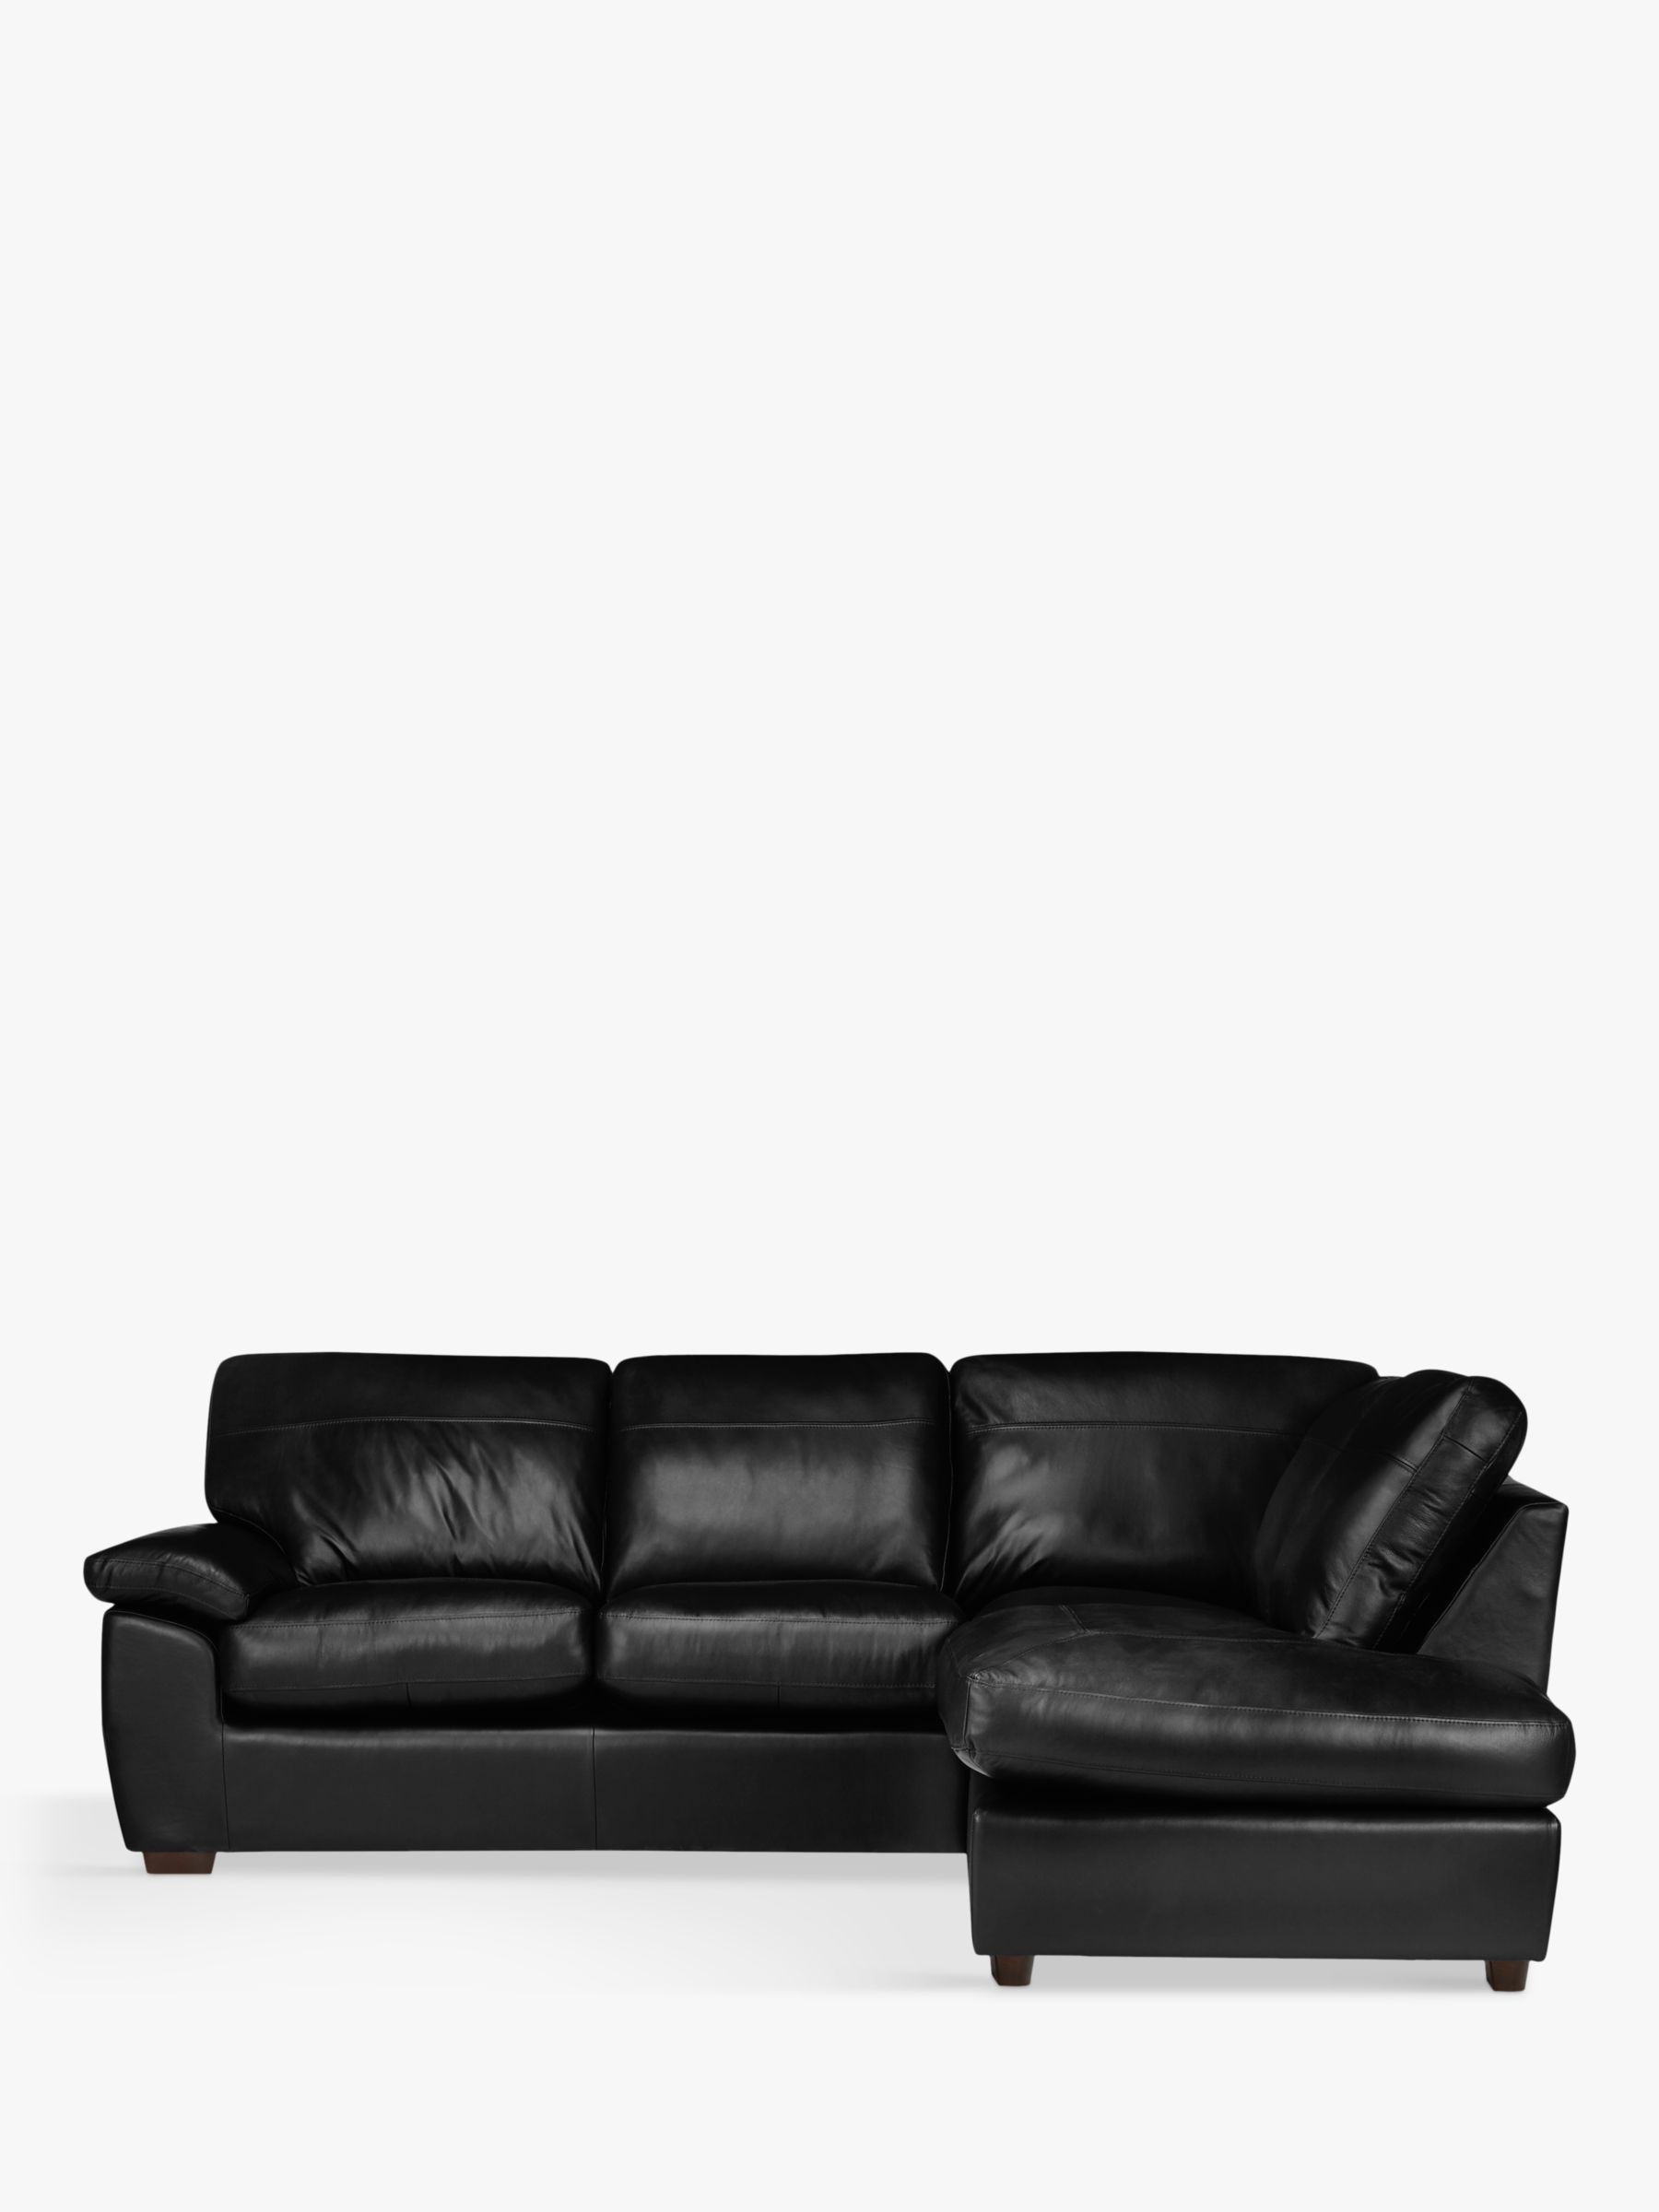 Camden Range, John Lewis Camden 5+ Seater RHF Chaise Corner End Leather Sofa, Dark Leg, Contempo Black